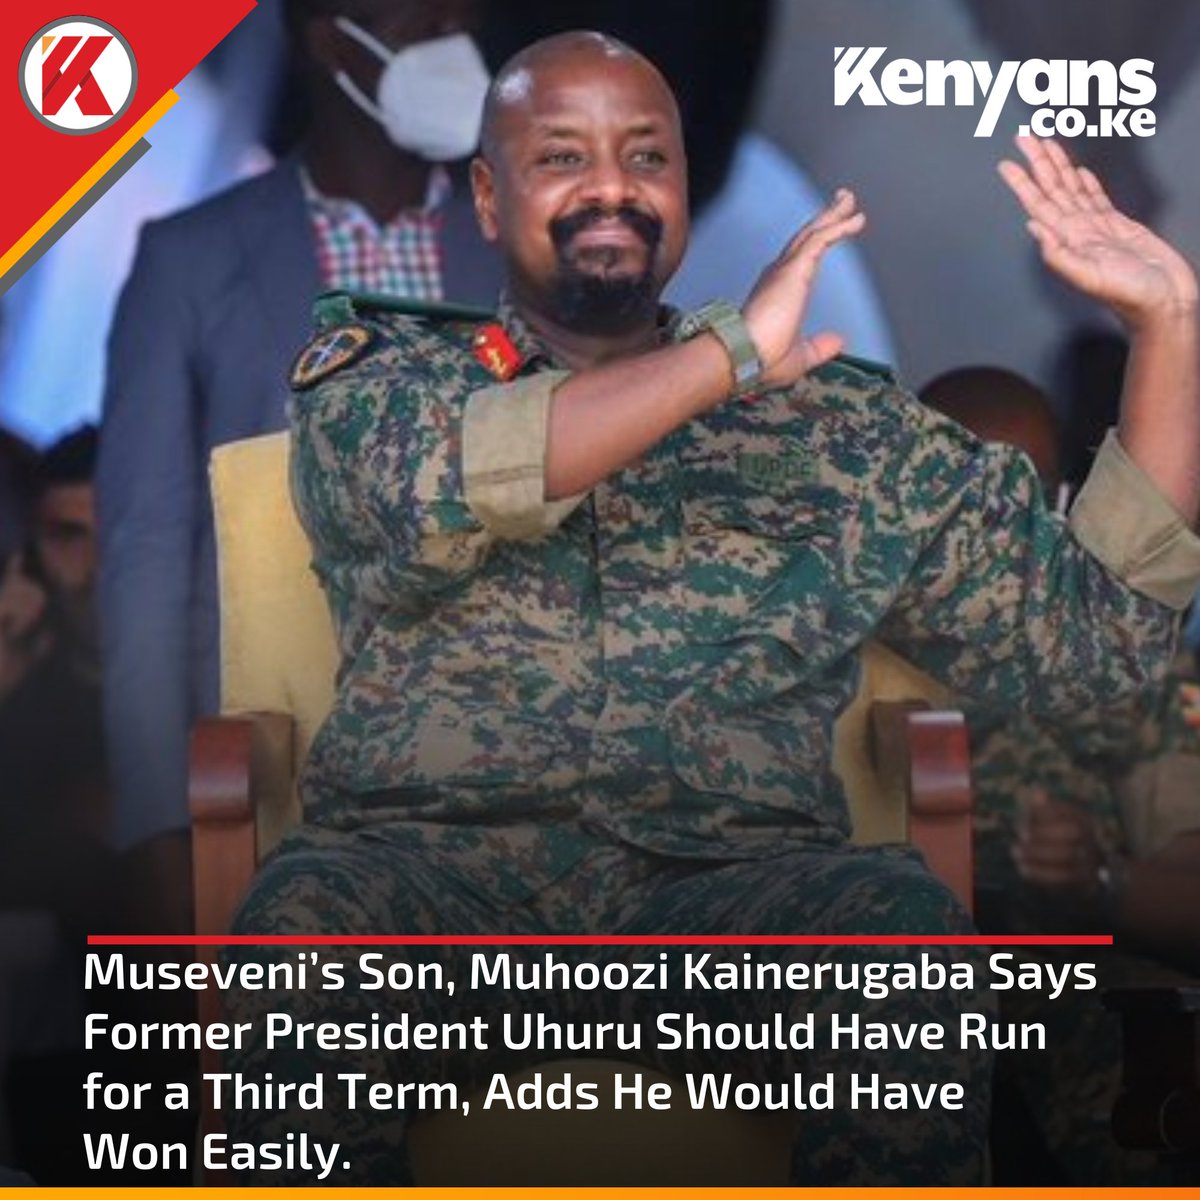 Museveni's son, Muhoozi Kainerugaba says former president Uhuru should have run for a third term.